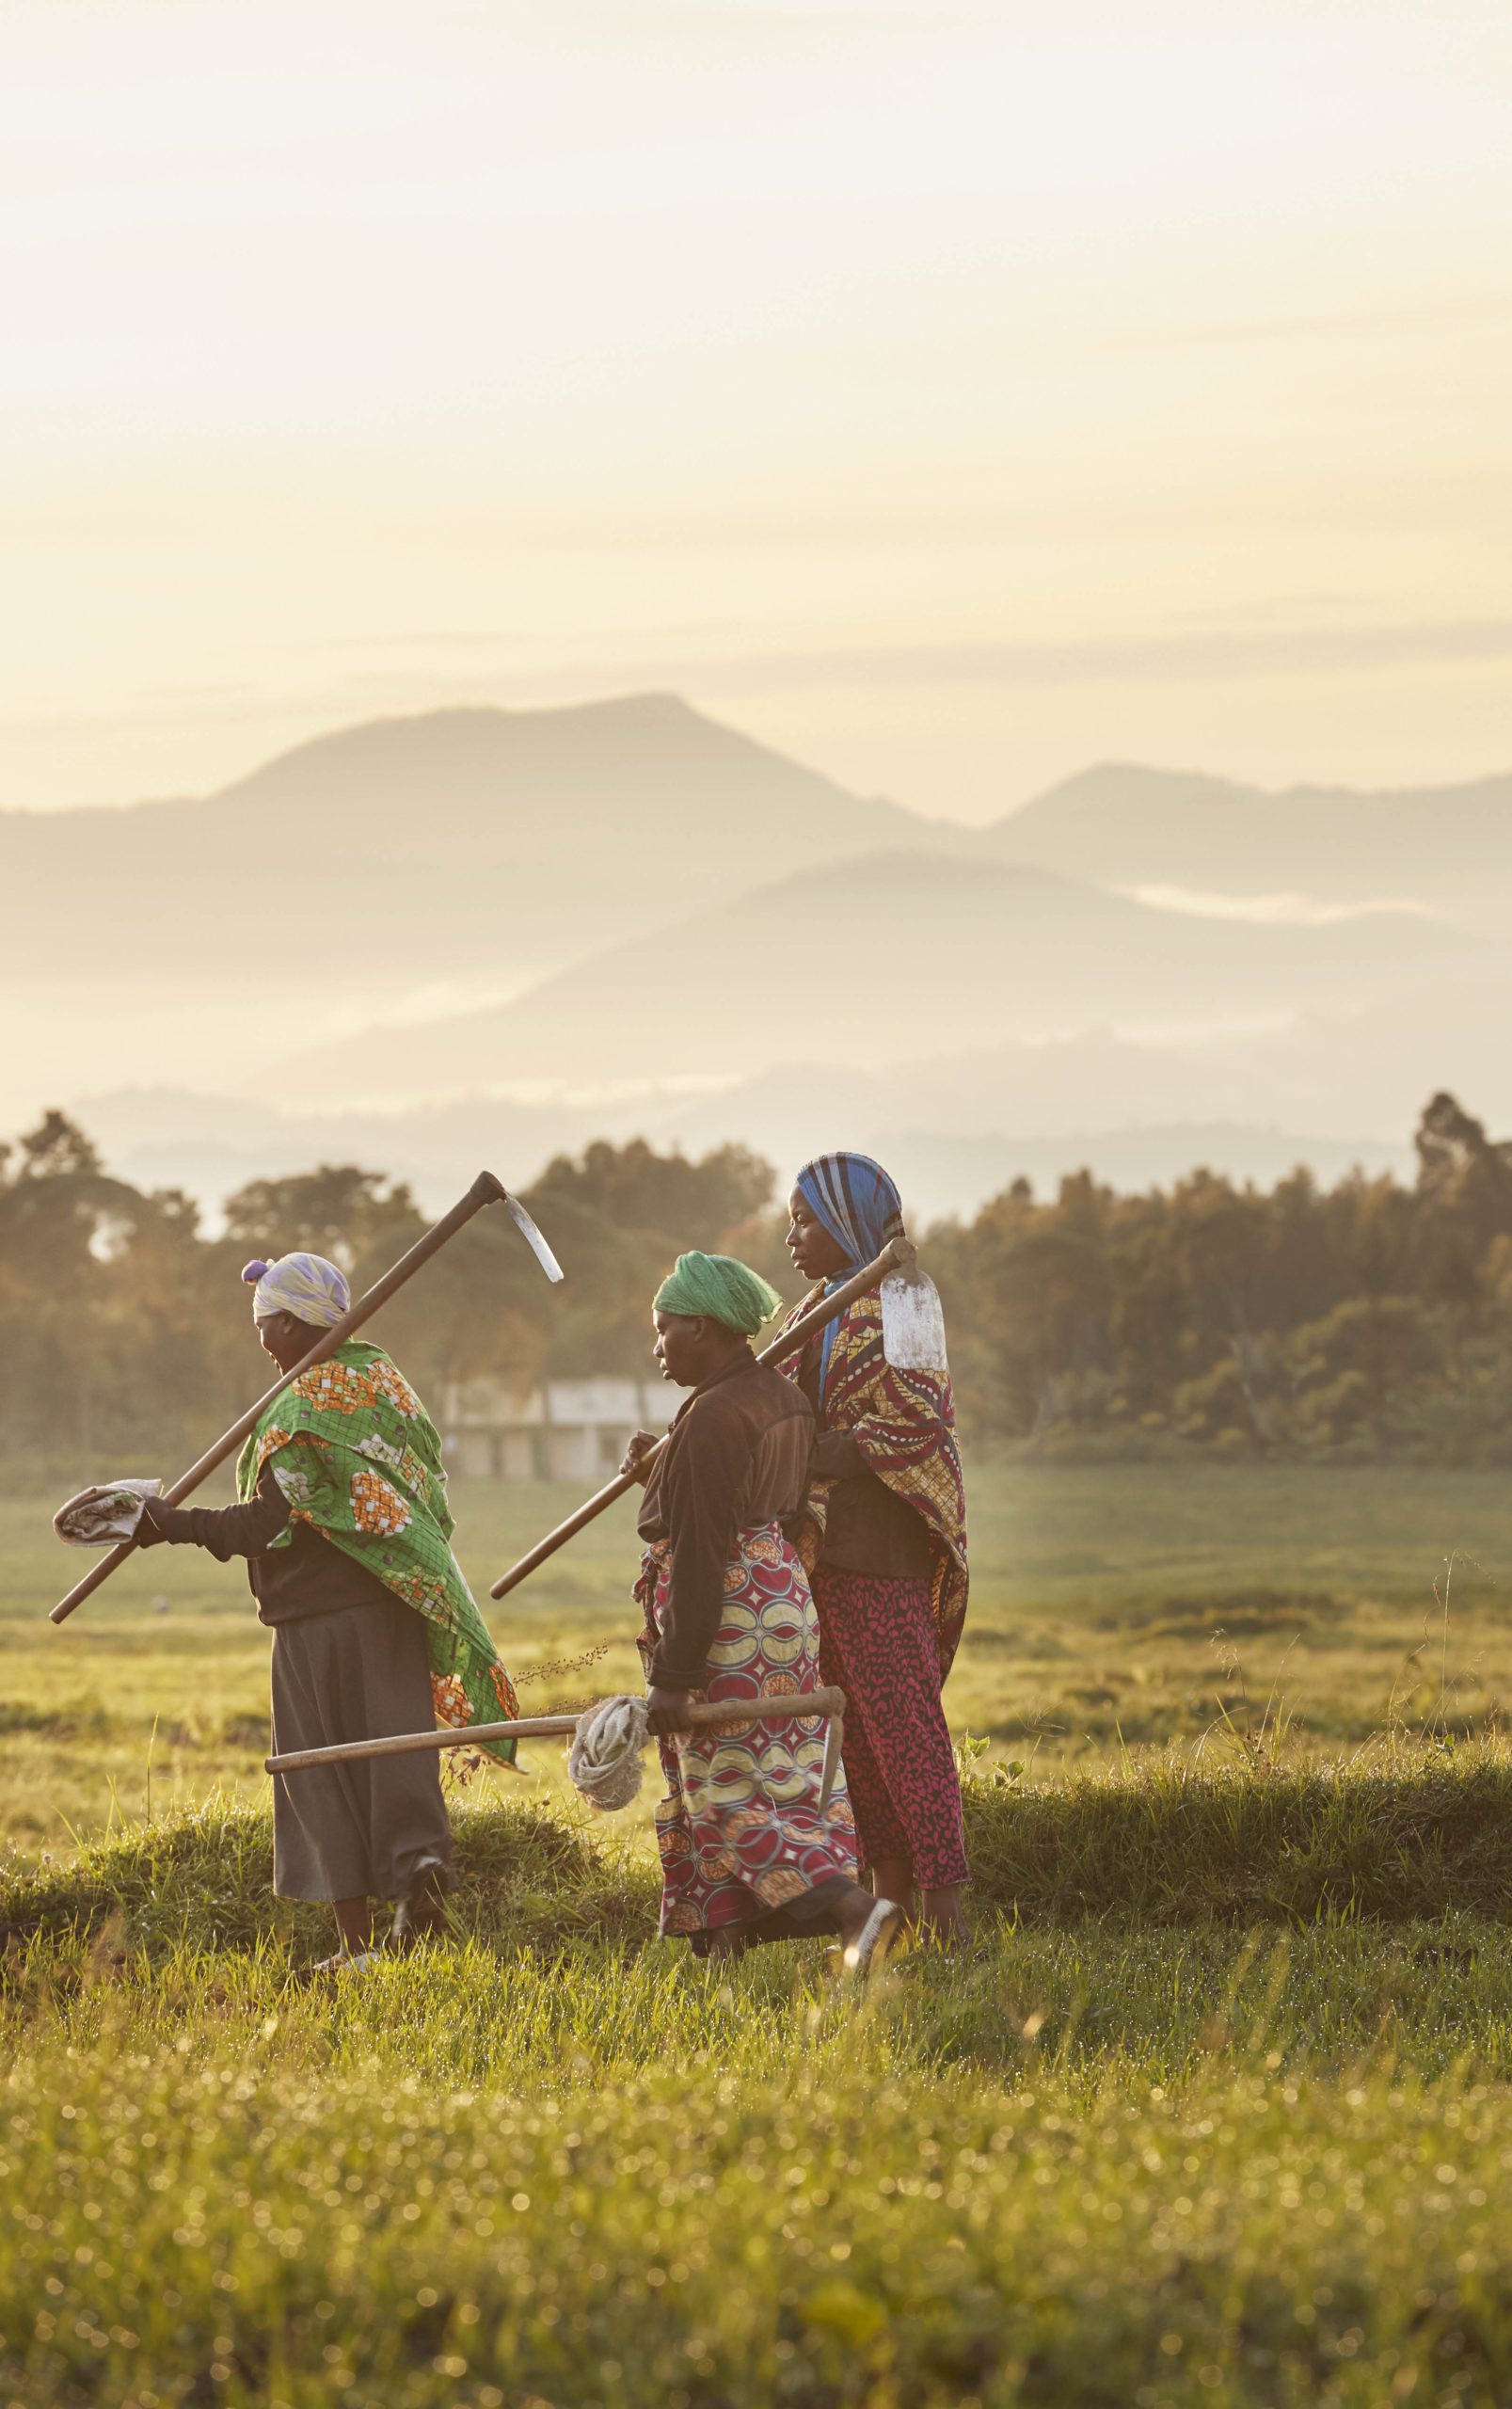 women working in the field with volcanoes in the background in rwanda